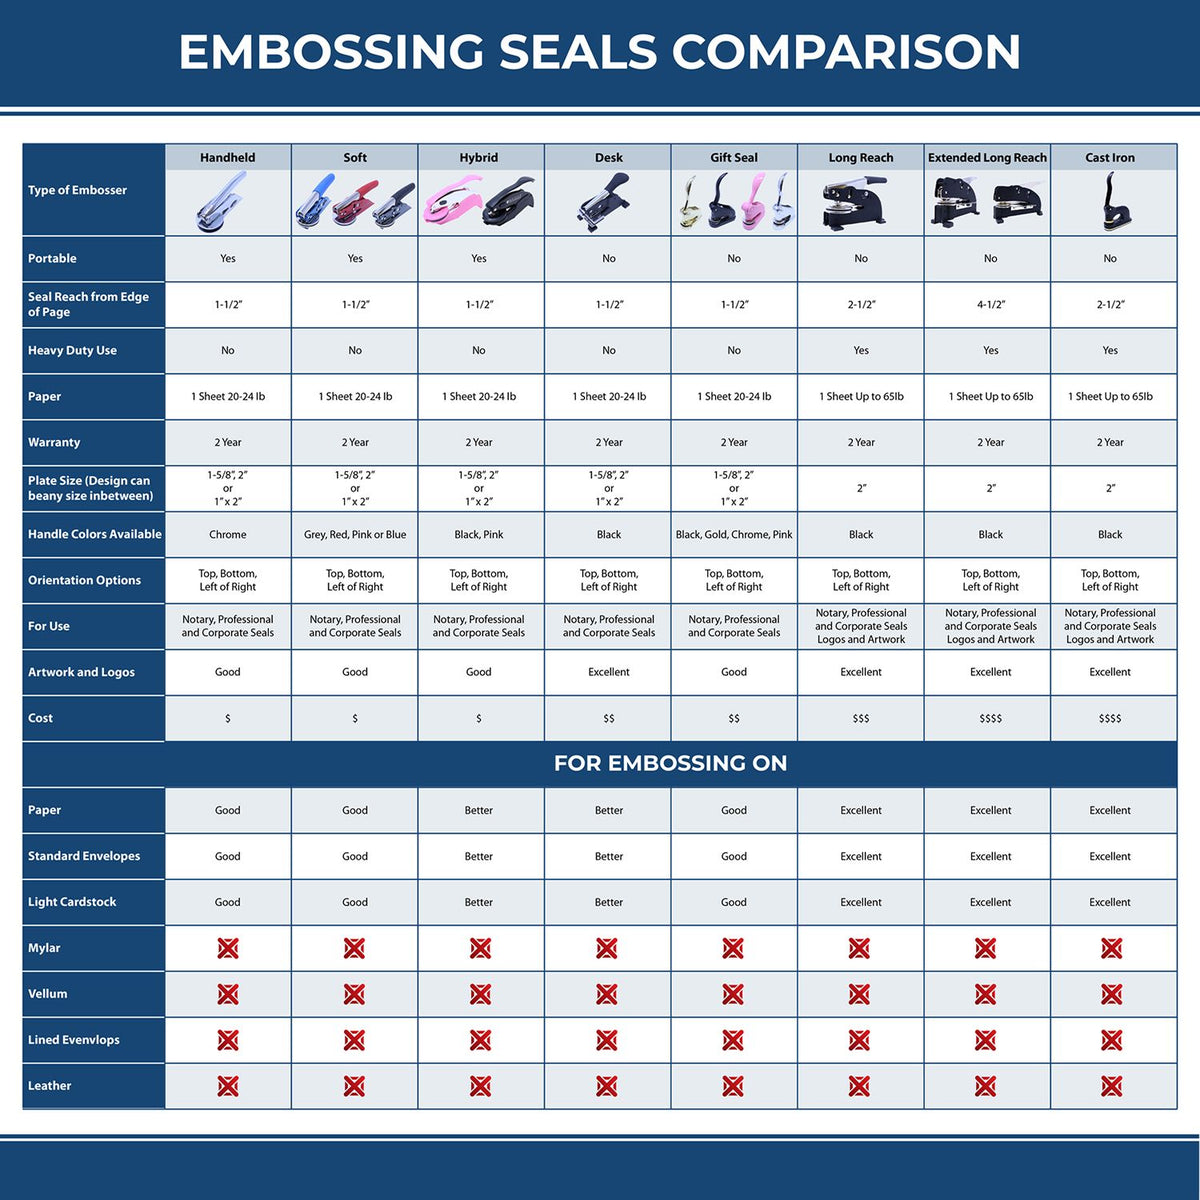 Interior Designer Pink Soft Seal Embosser 3036ID Embossing Seal Comparison